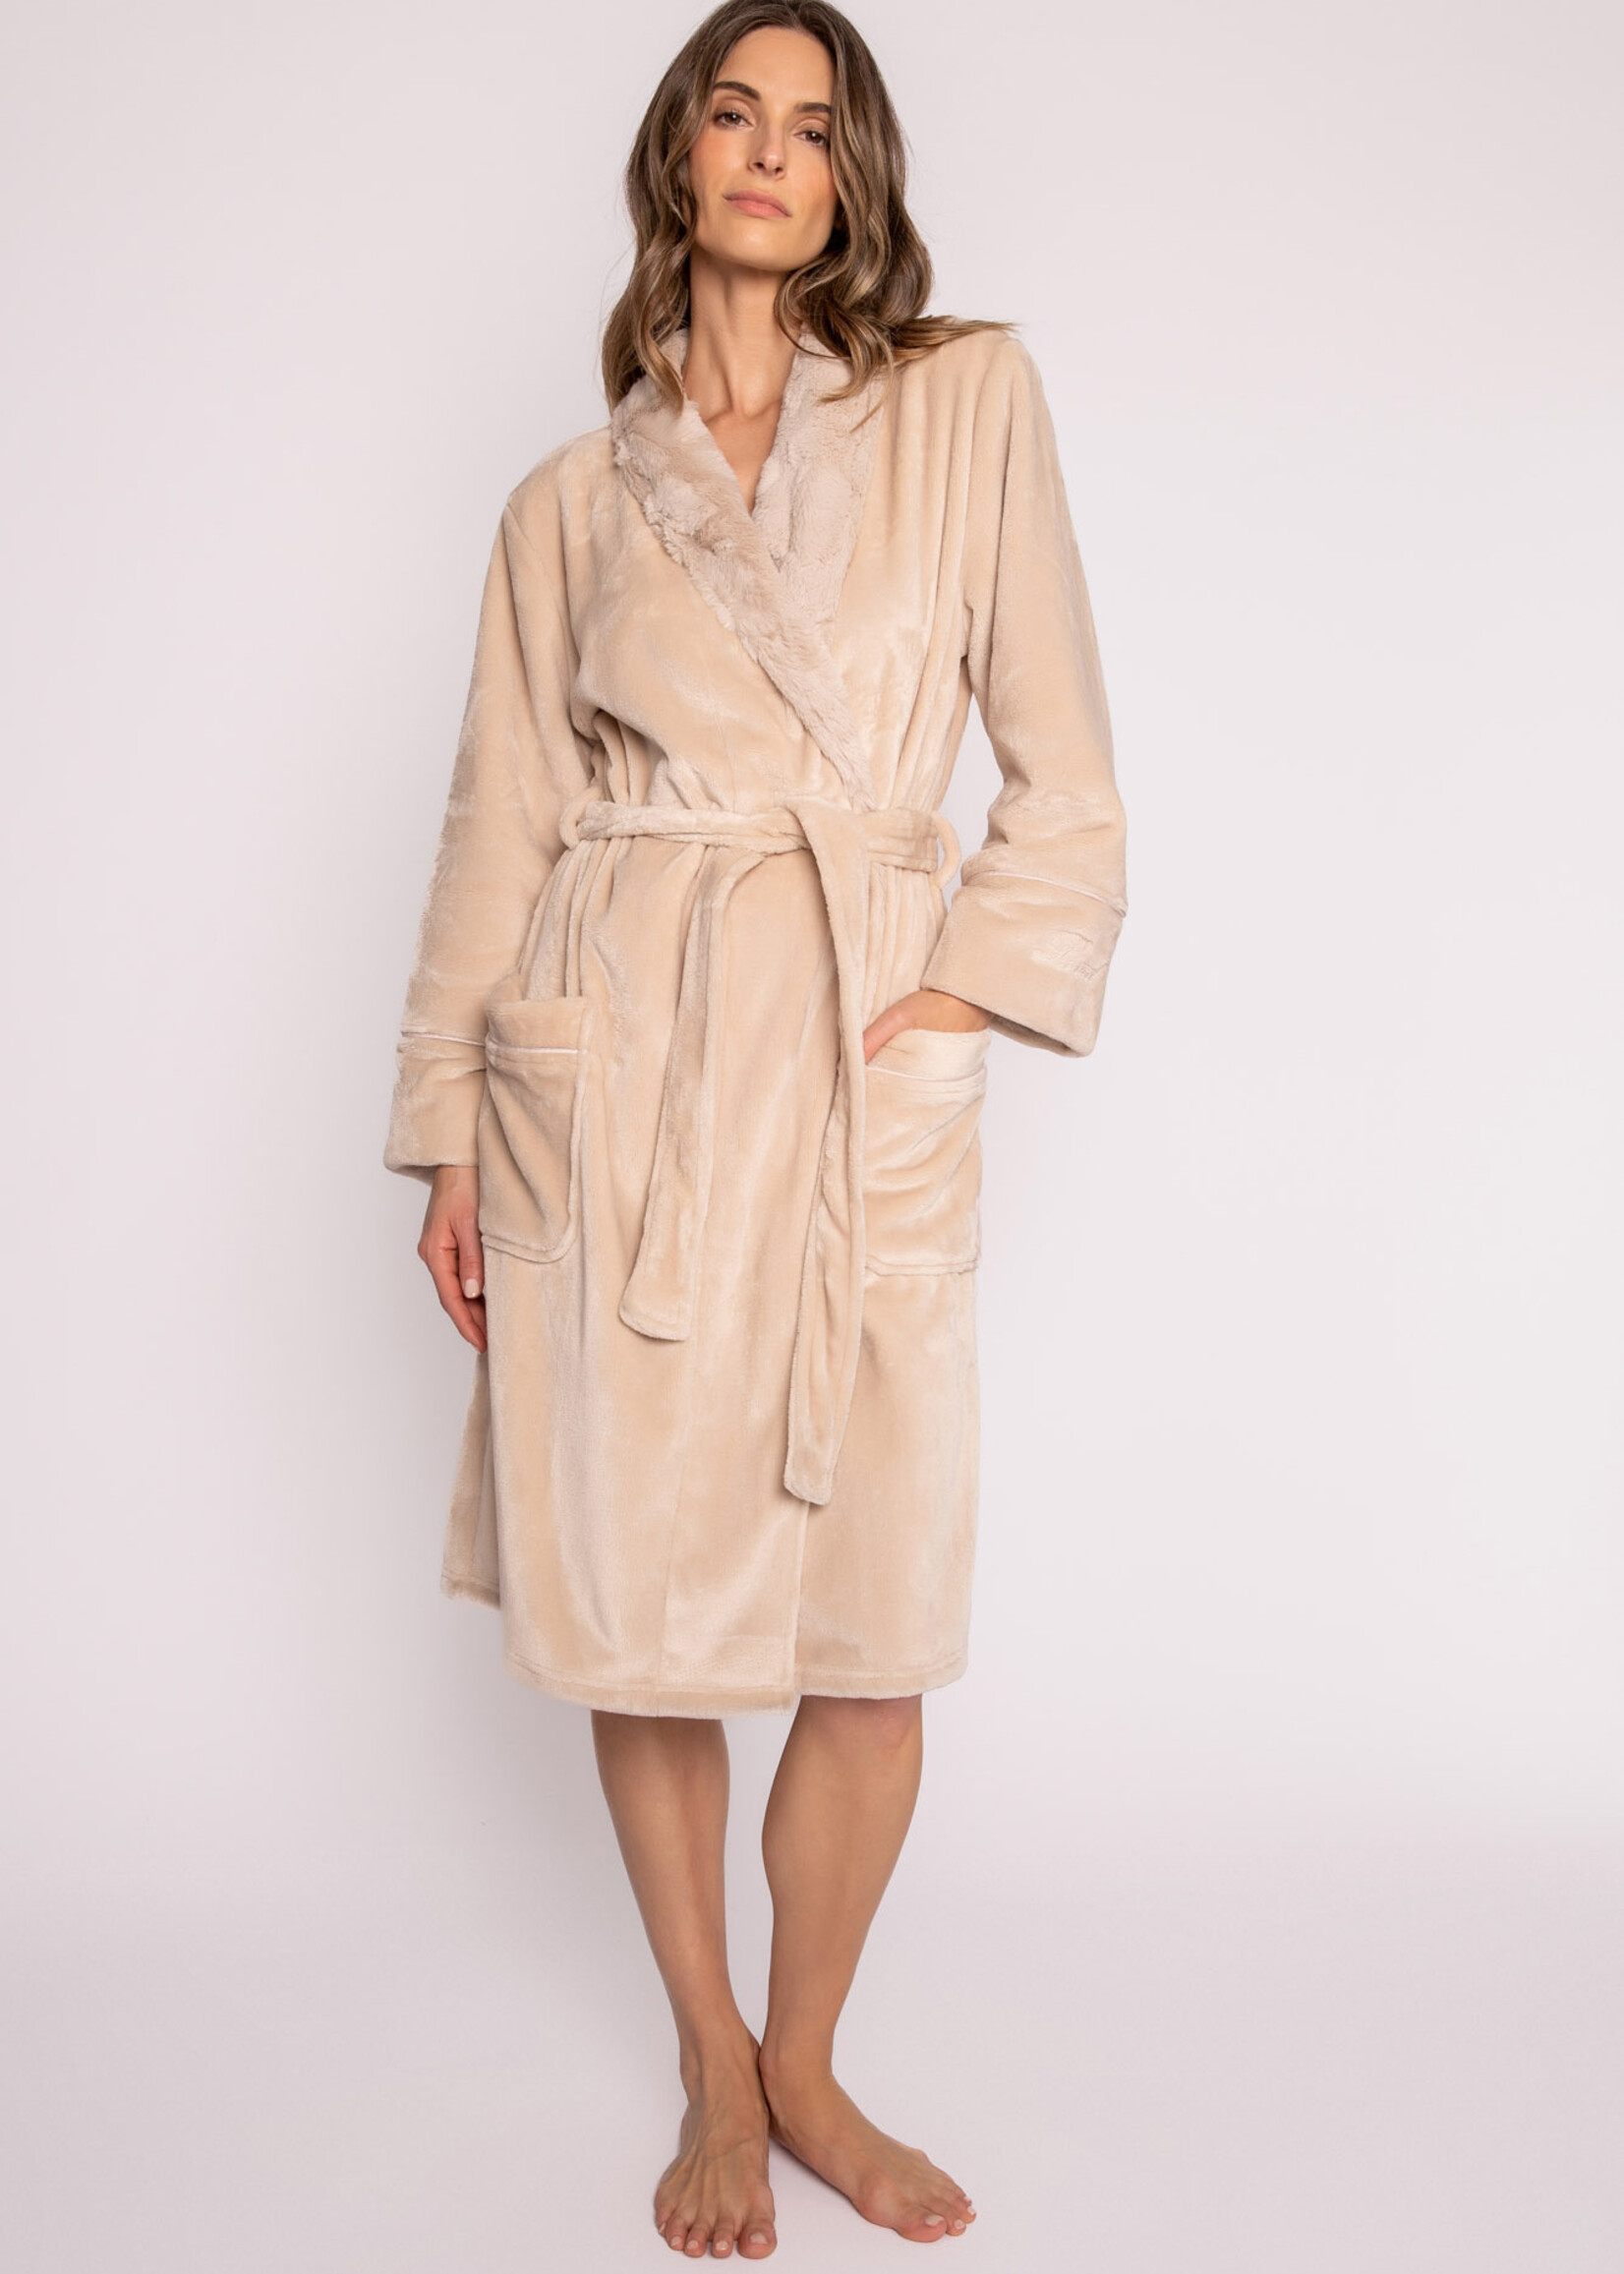 Luxe Plush Robe - Evelyn Lane Clothing Co.